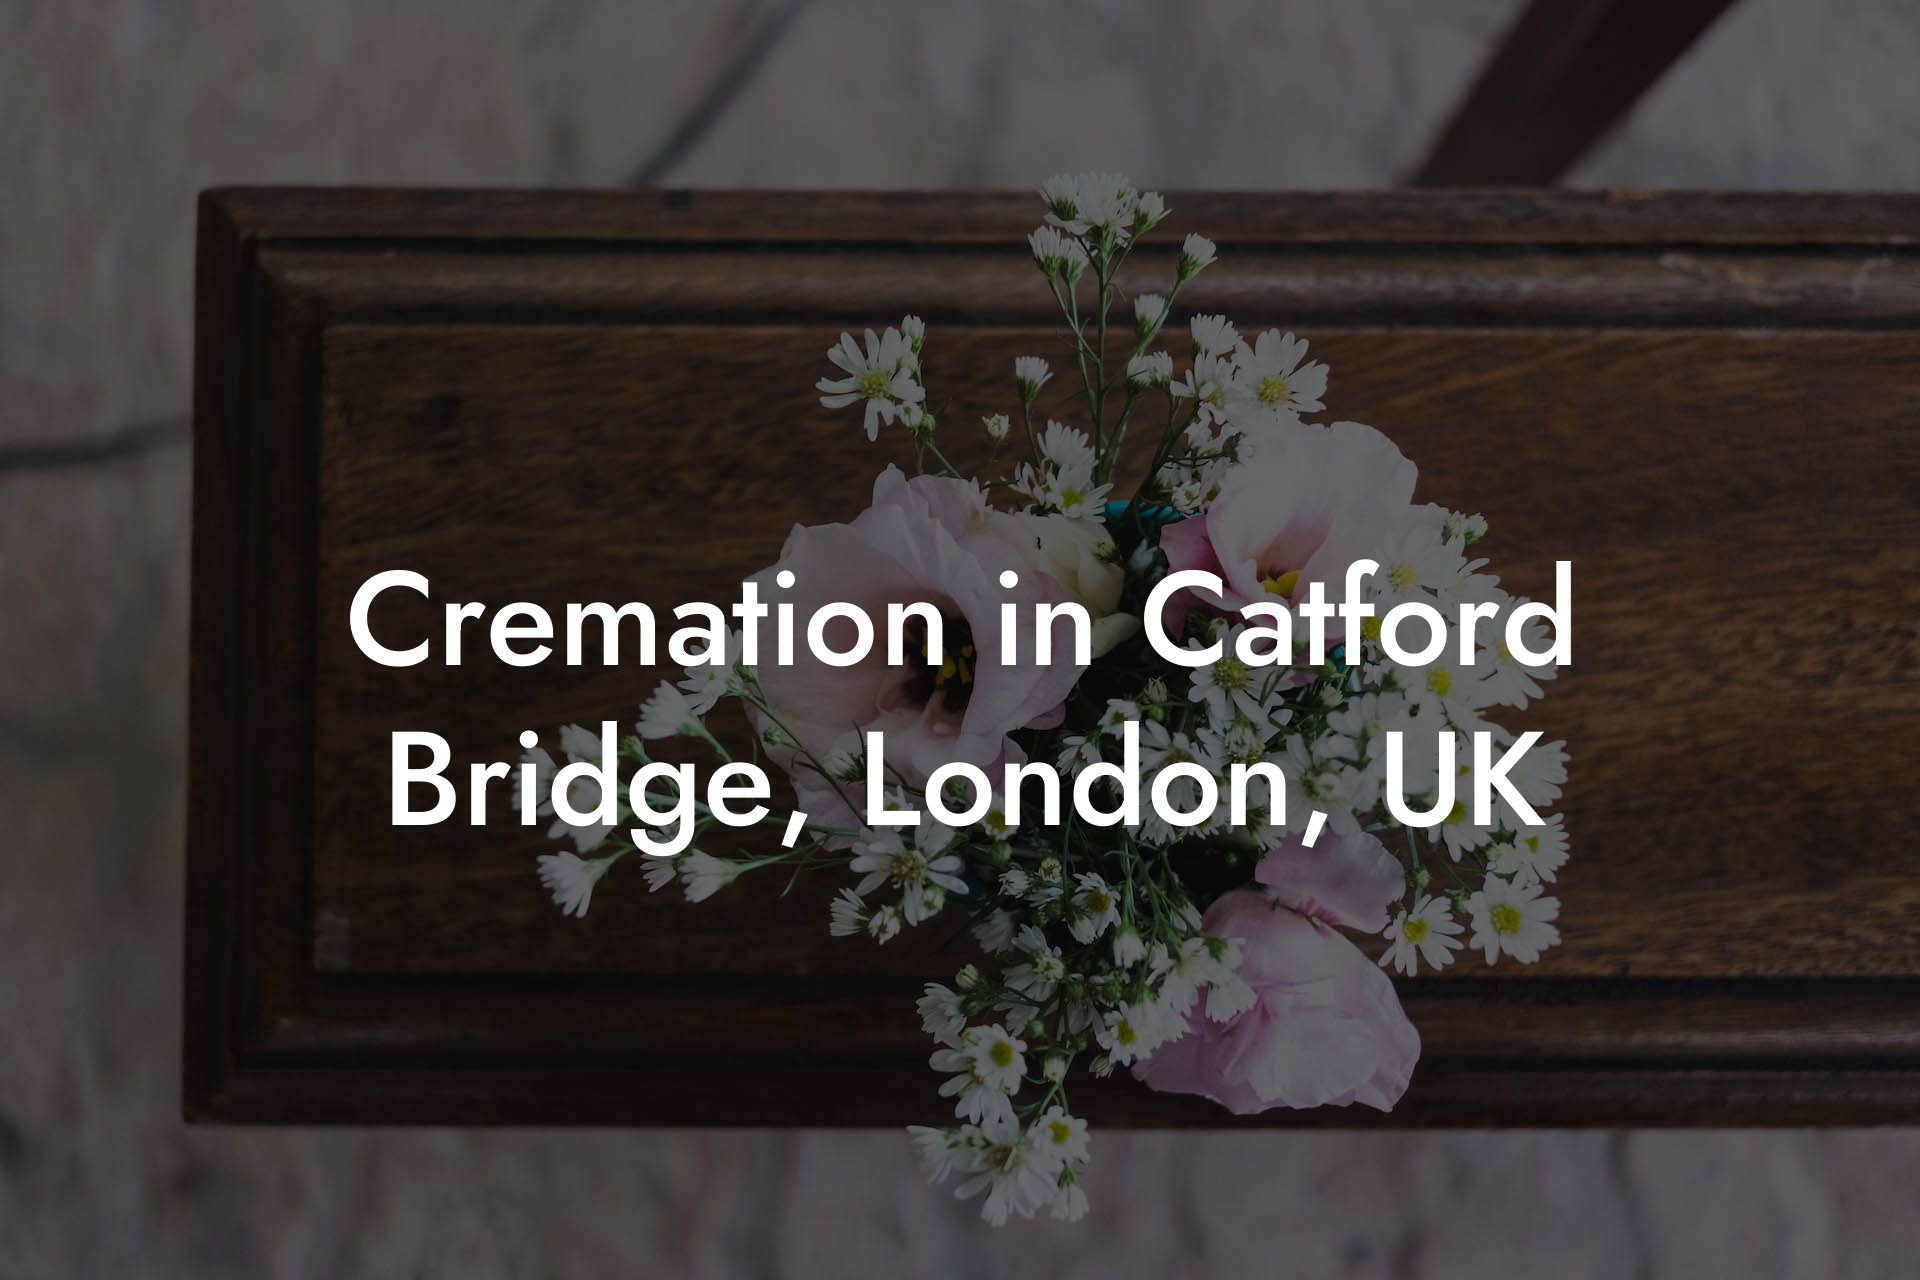 Cremation in Catford Bridge, London, UK